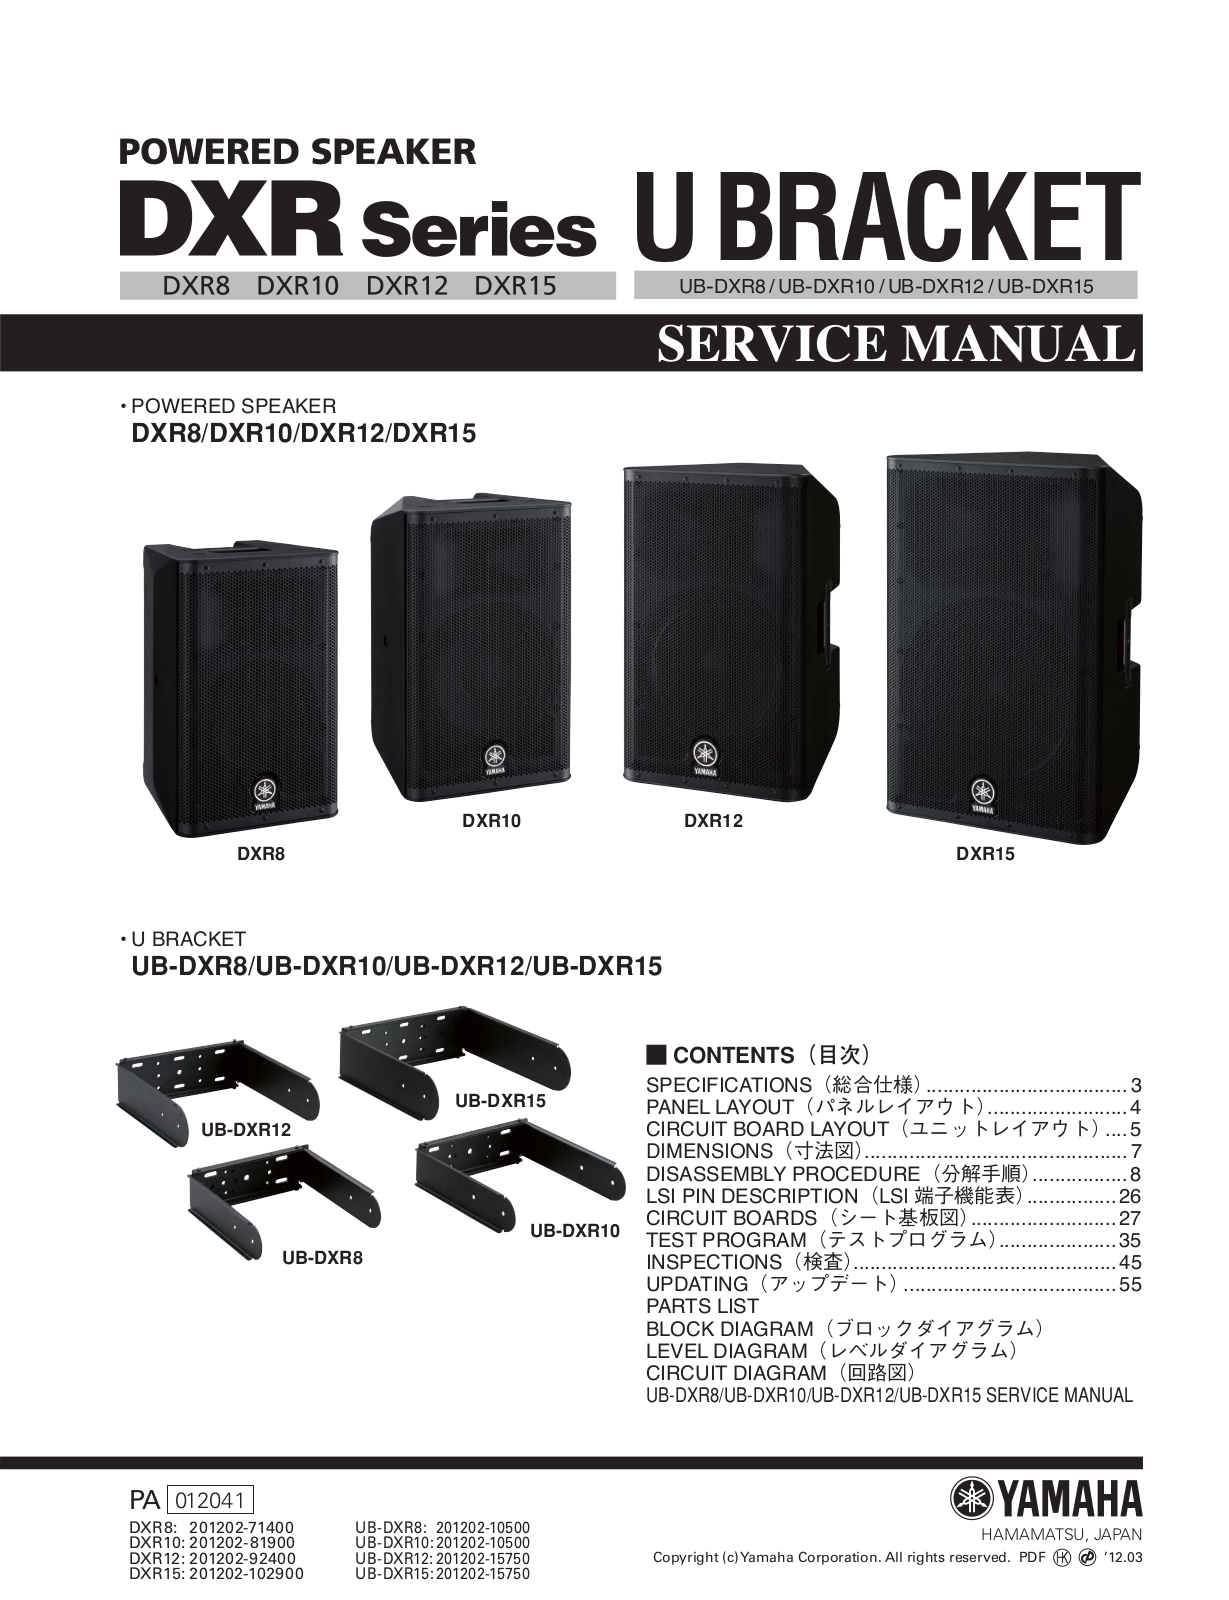 Yamaha DXR8, DXR10, DXR12, DXR15 Service manual